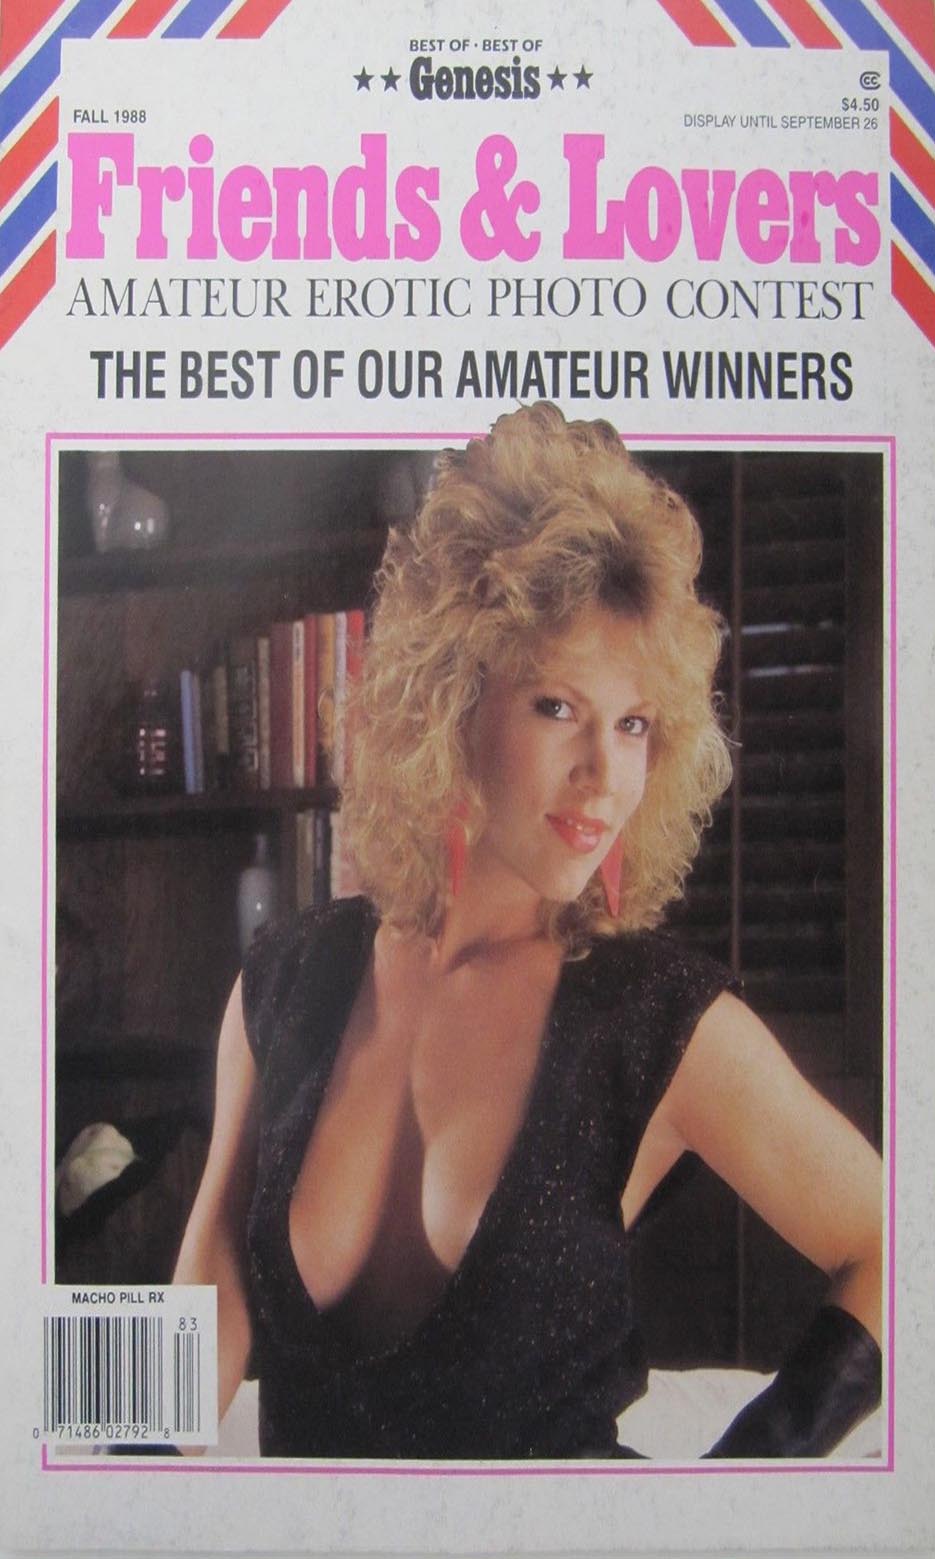 Best of Genesis Fall 1988 magazine back issue Best of Genesis magizine back copy 